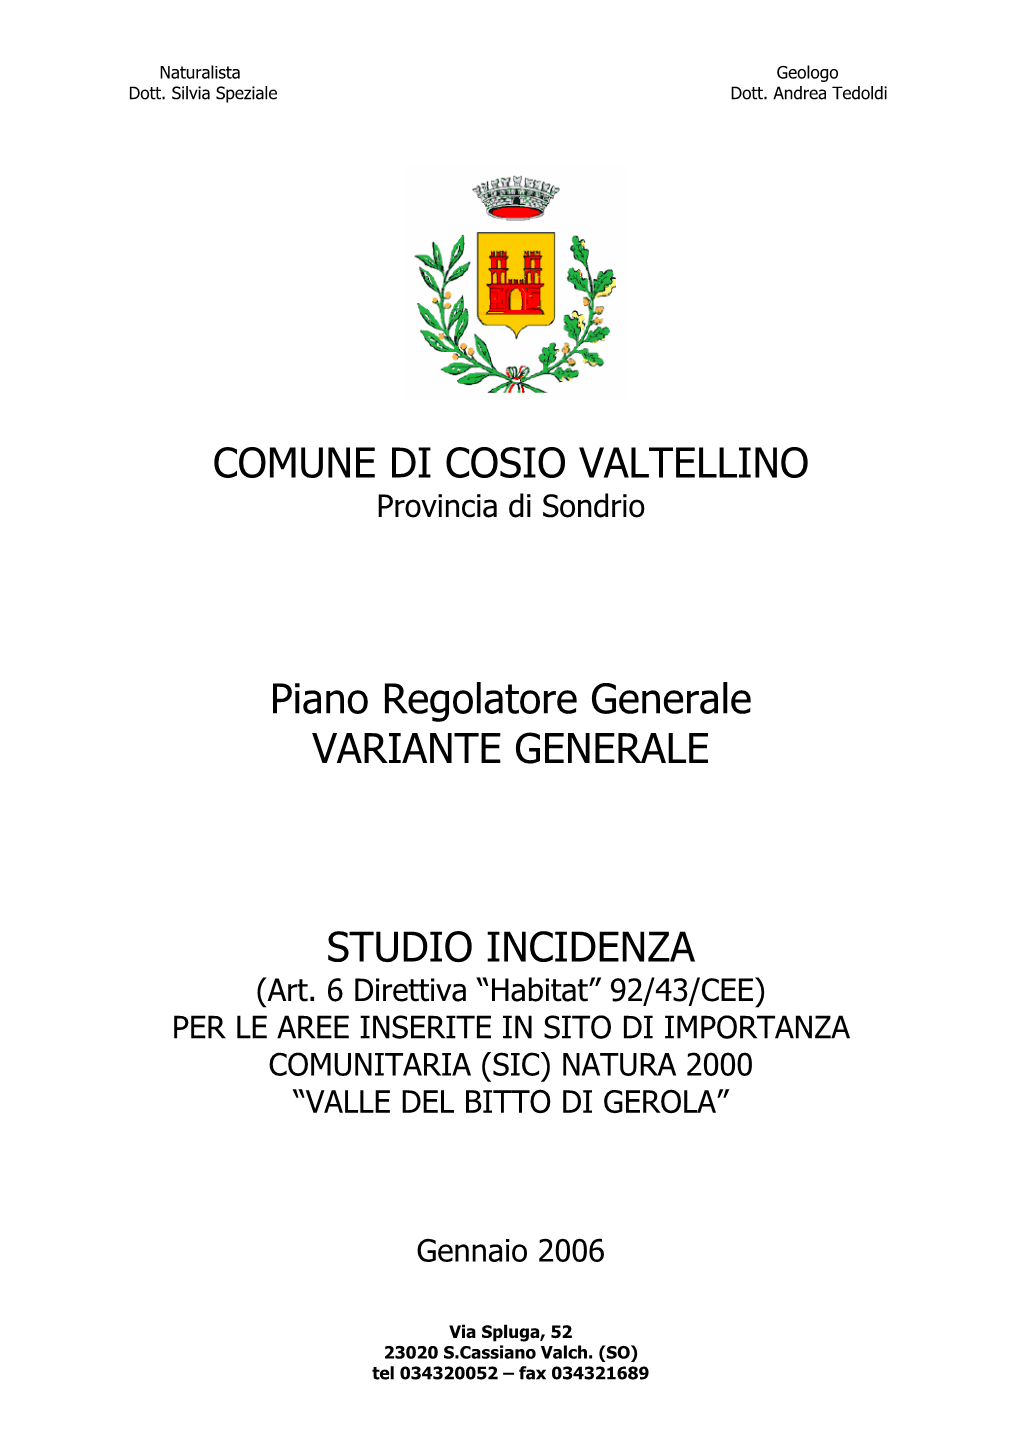 COMUNE DI COSIO VALTELLINO Piano Regolatore Generale